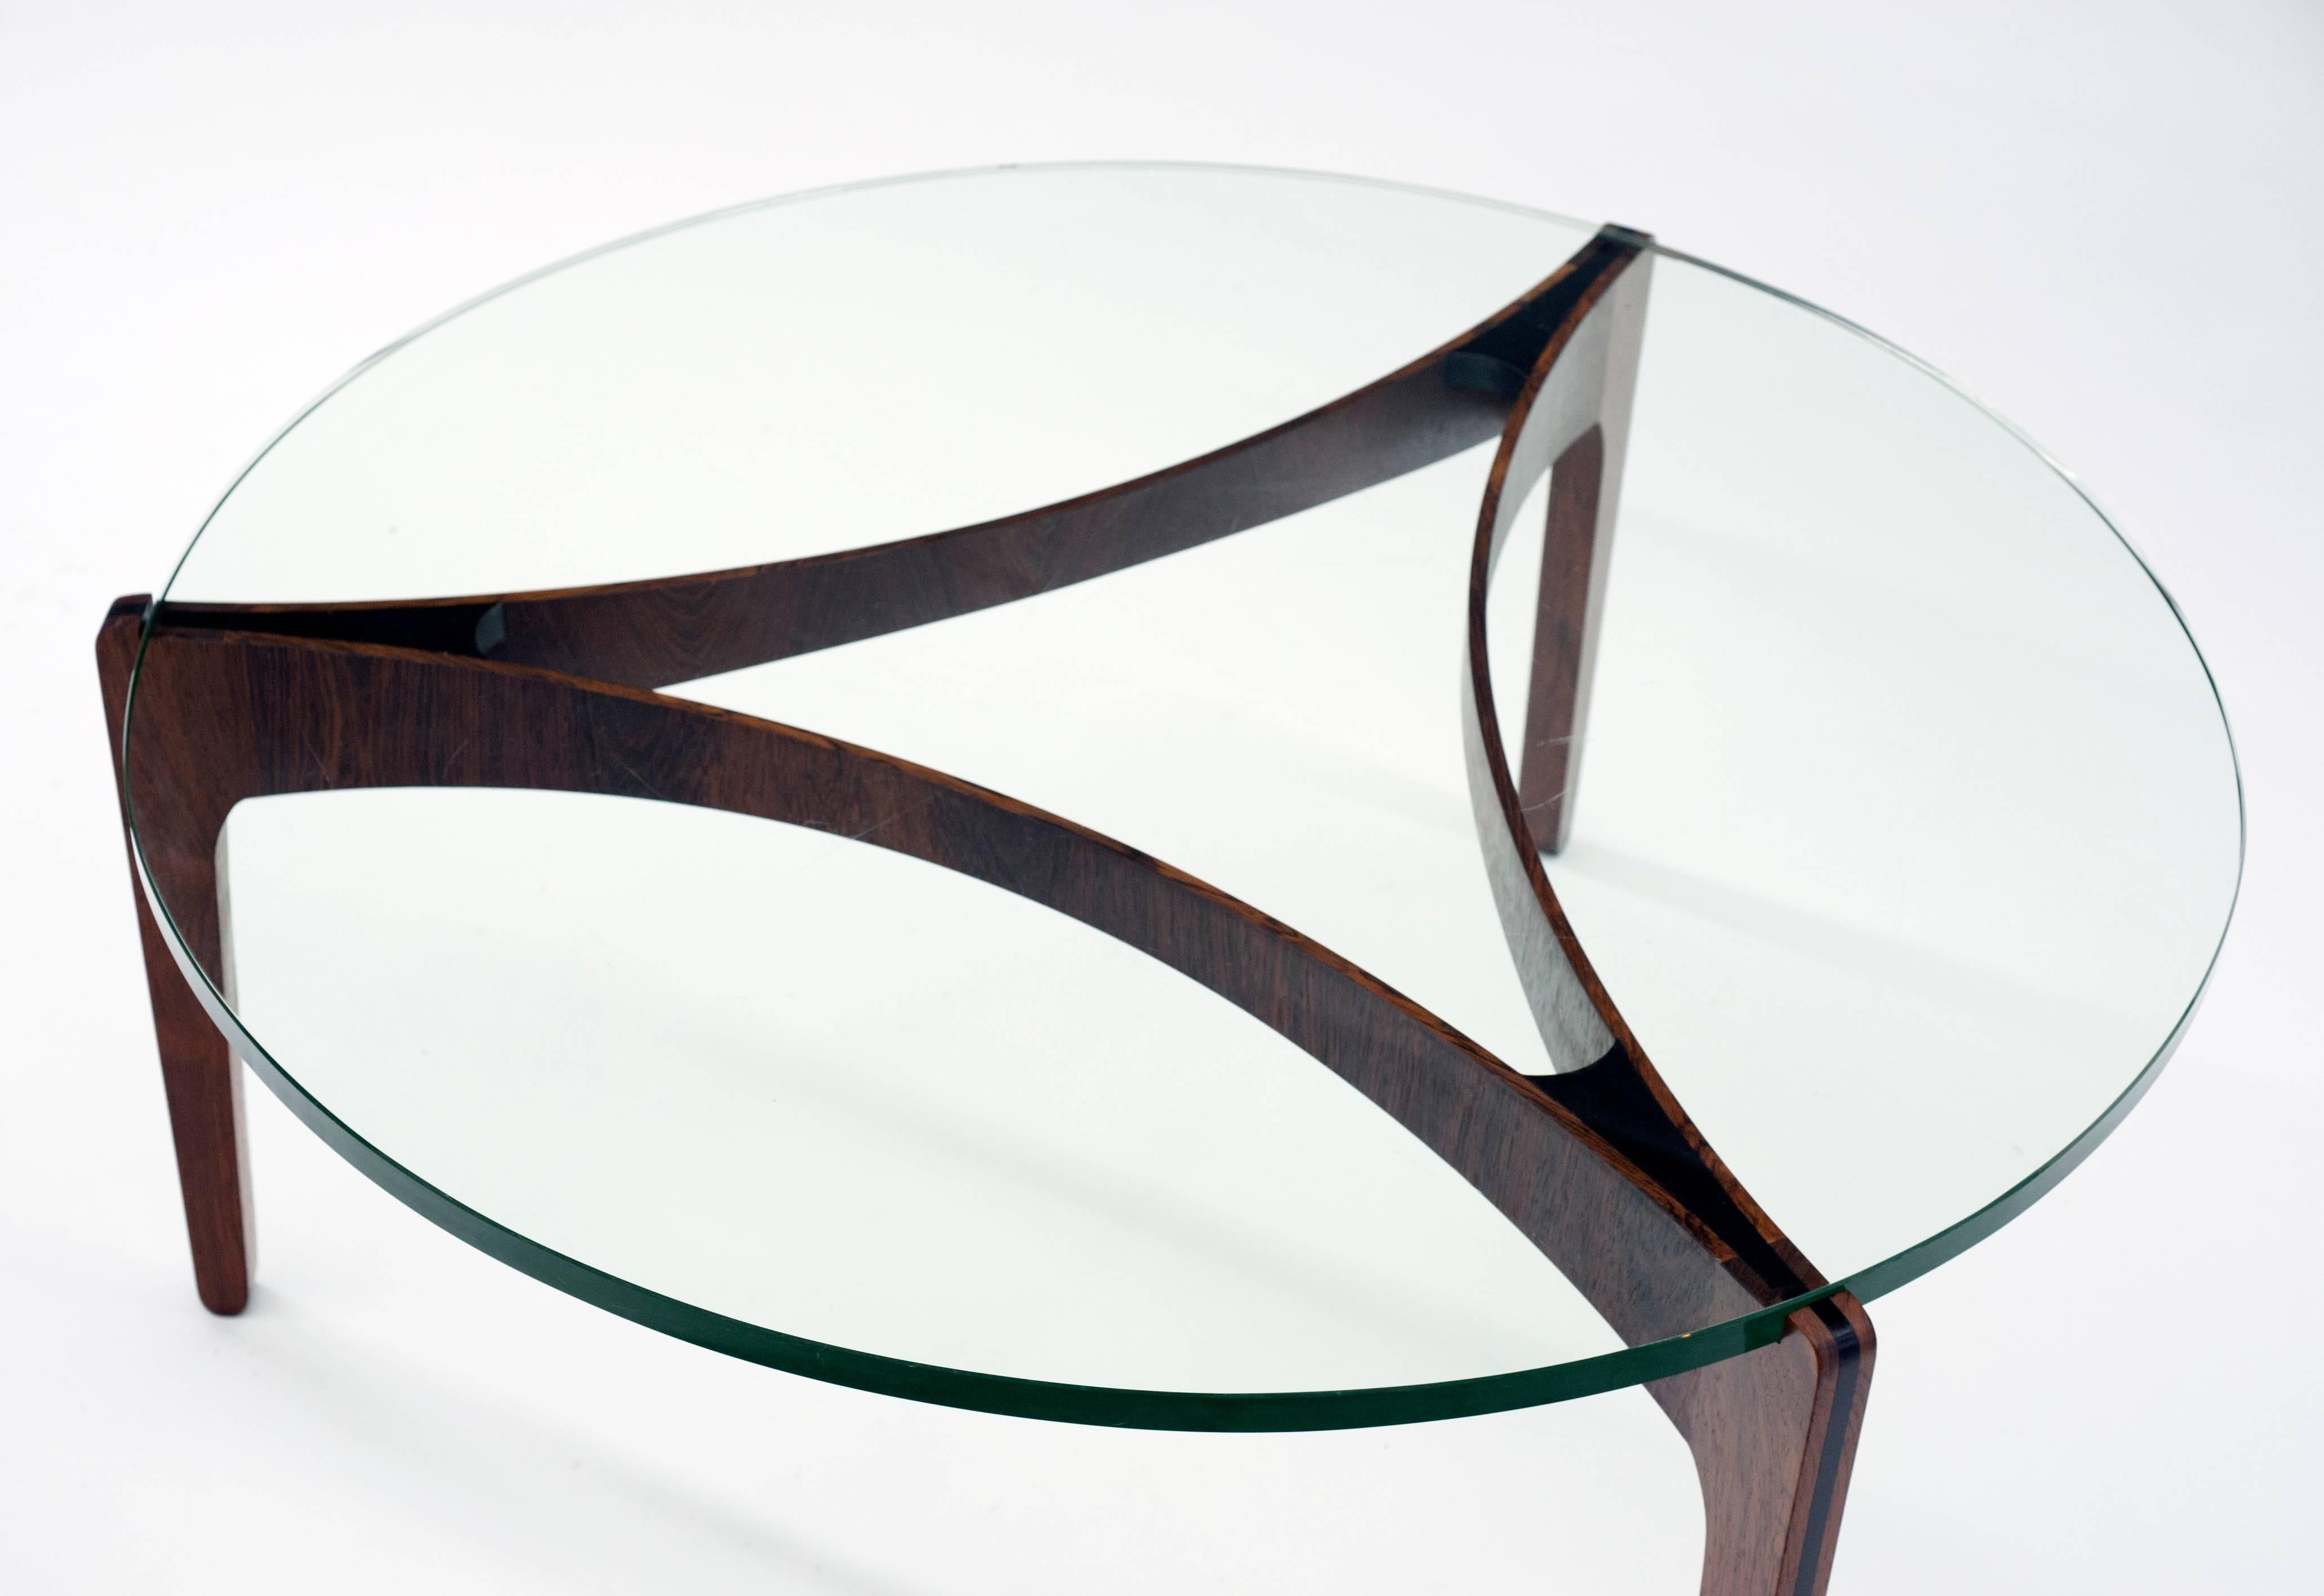 Danish Modern Rosewood and Ebony Glass Coffee Table by Sven Ellekaer, 1962 1